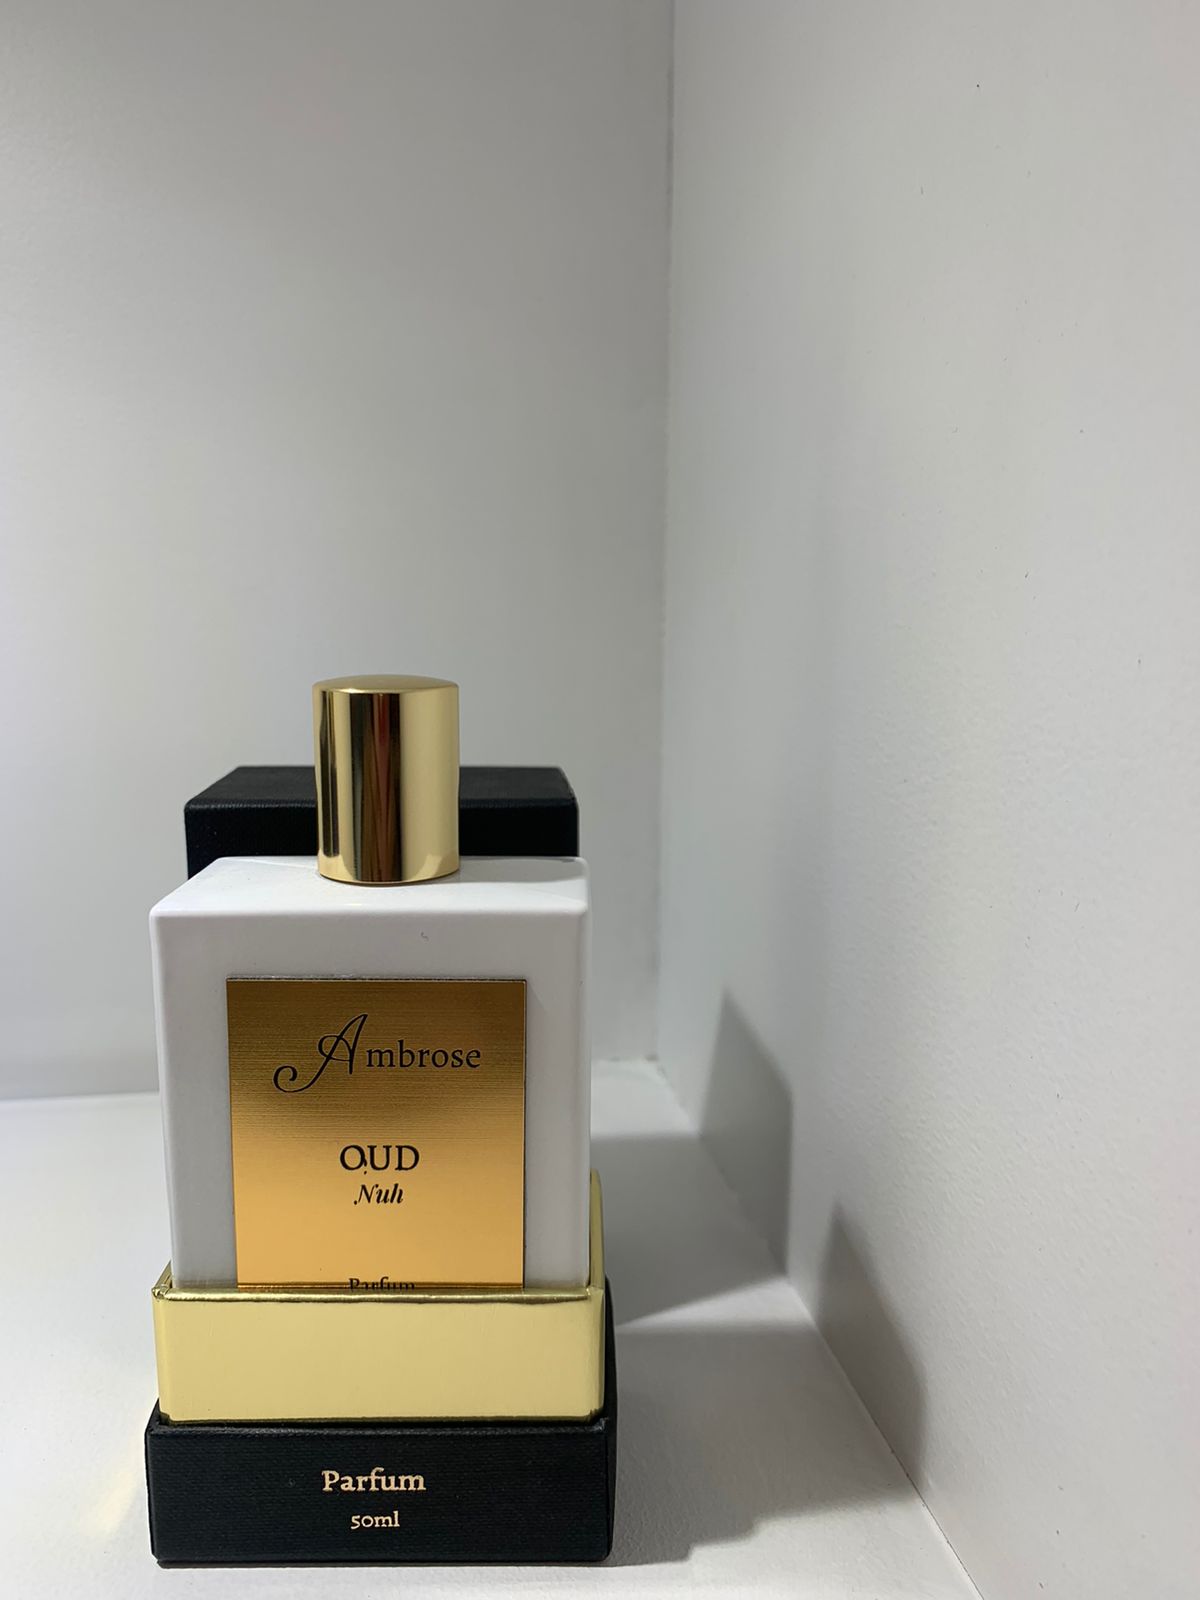 Ambrose Perfume Nuh Oud White - AL Capone PremiumAccessories952-1